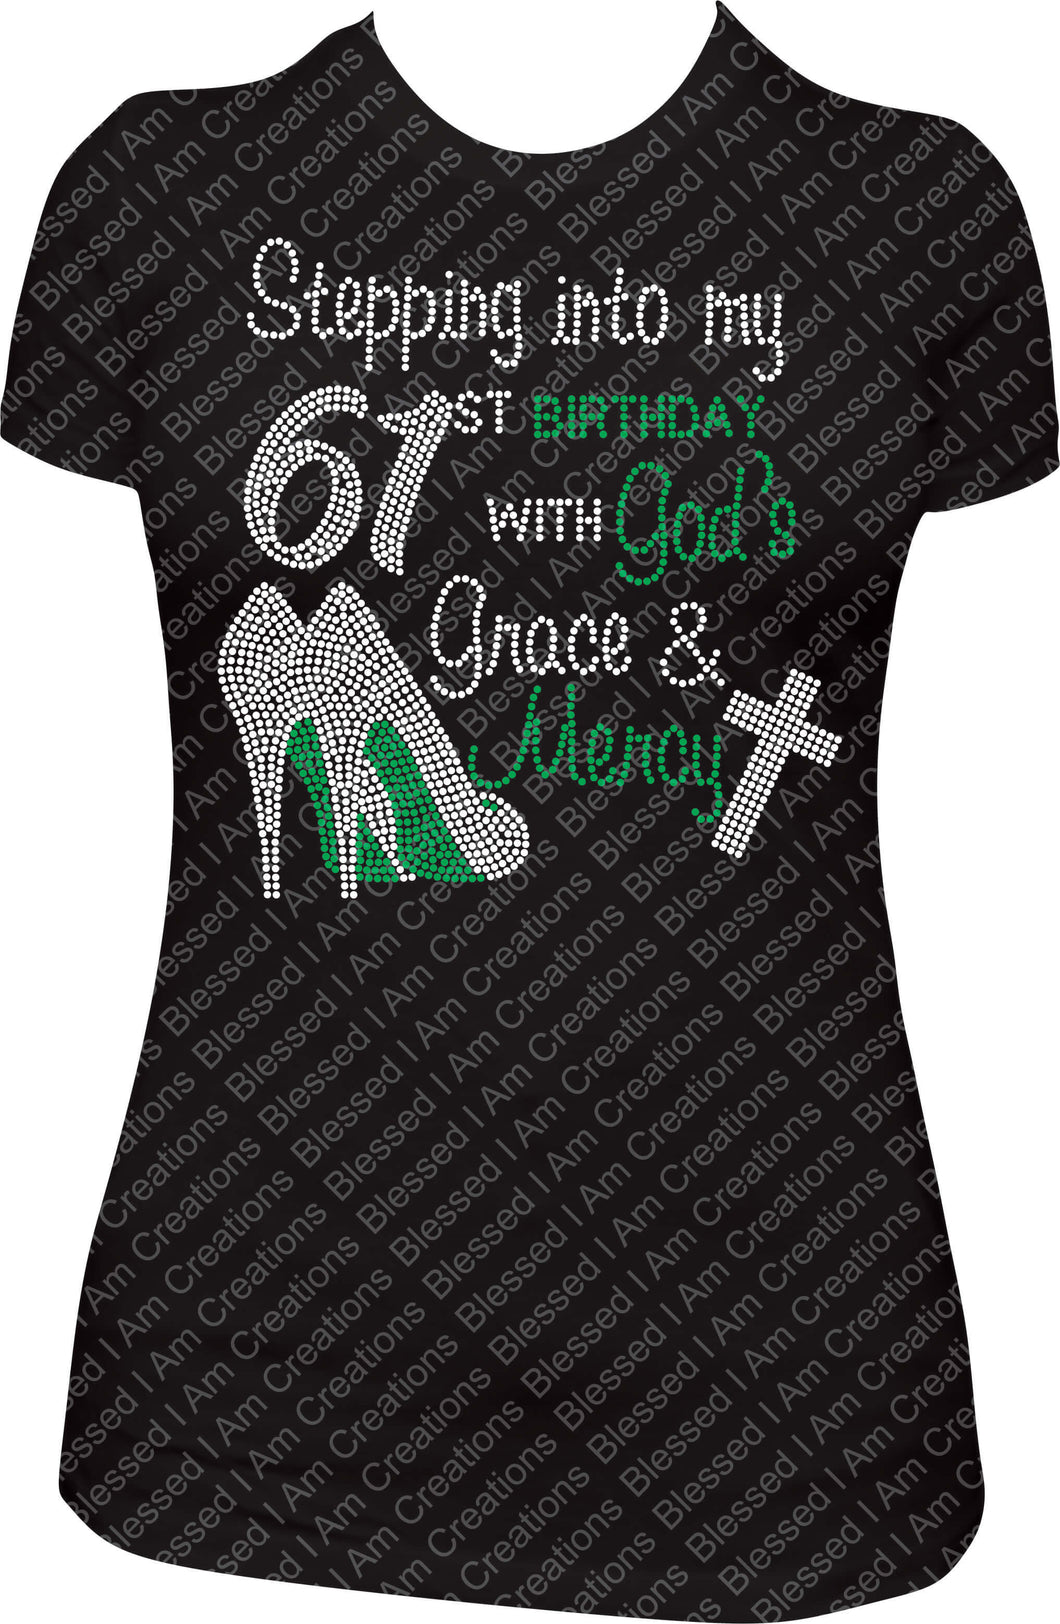 Stepping into my 61st Birthday With God's Grace and Mercy Rhinestone Birthday Shirt